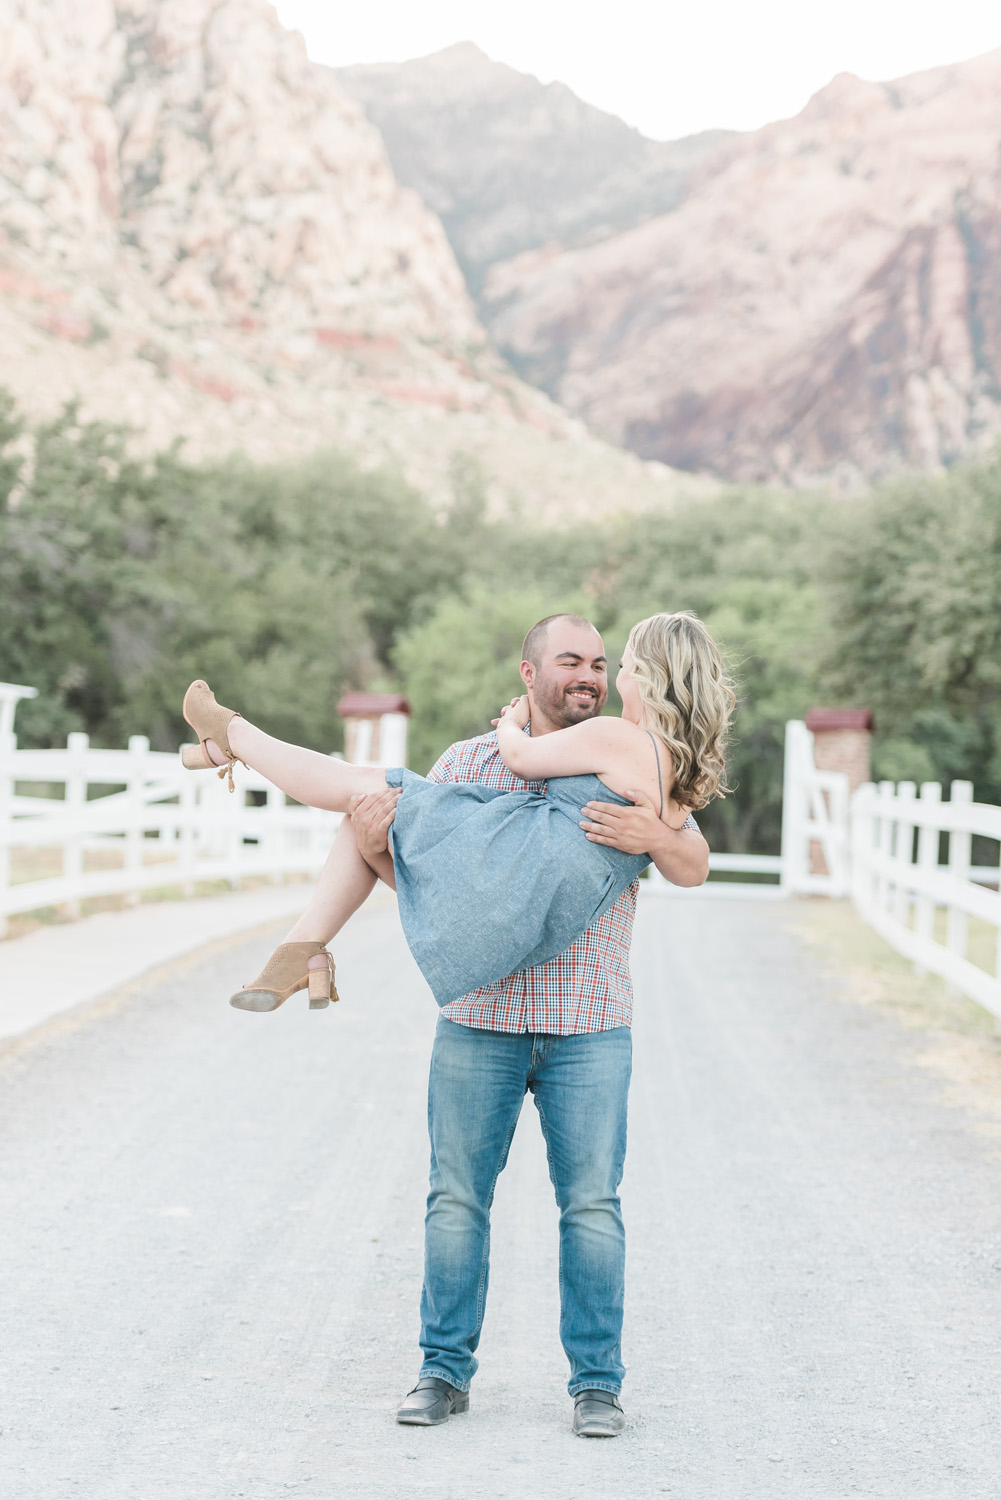 Spring Mountain Ranch Engagement Session | Kristen Marie Weddings + Portraits, Las Vegas Engagement Photographer Kristen Marie